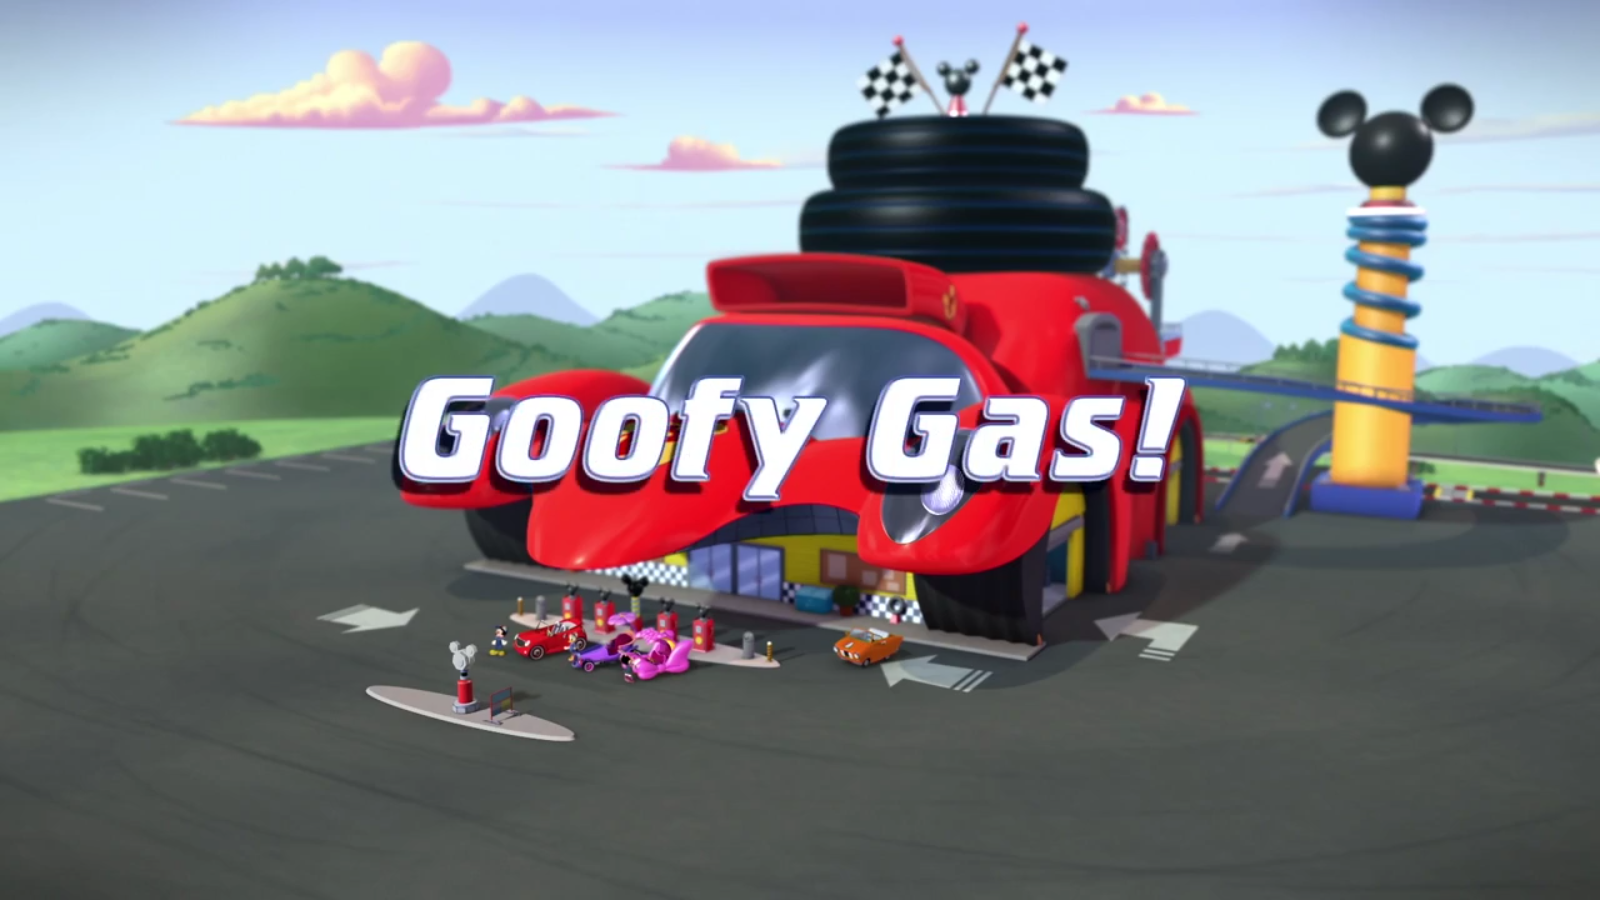 Goofy Gas!